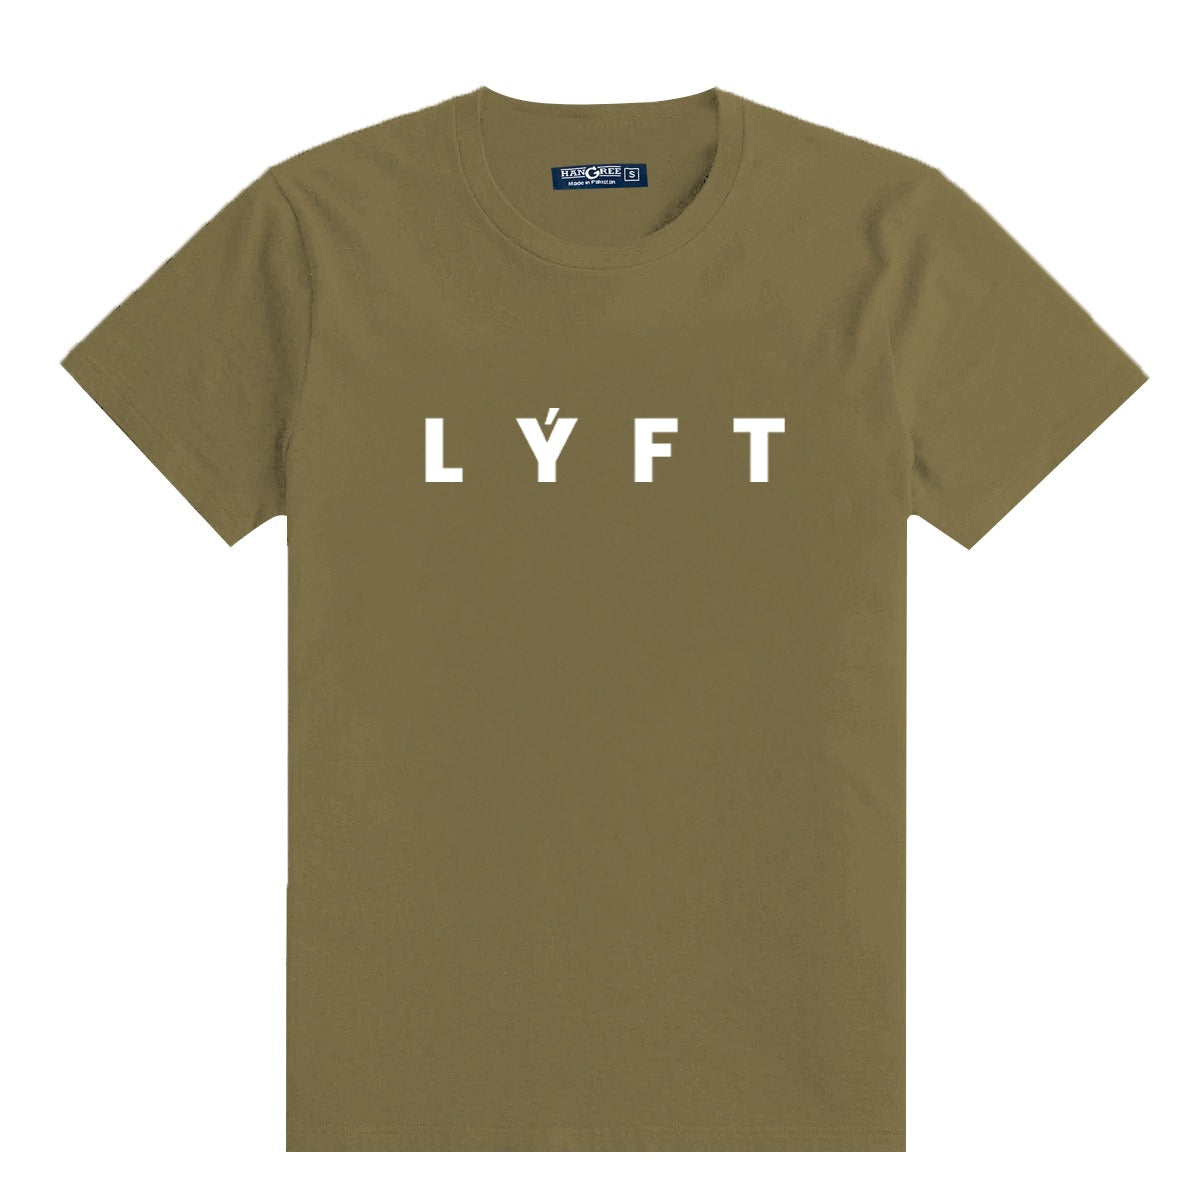 L Y F T Printed Slim Pattern Tee Shirt